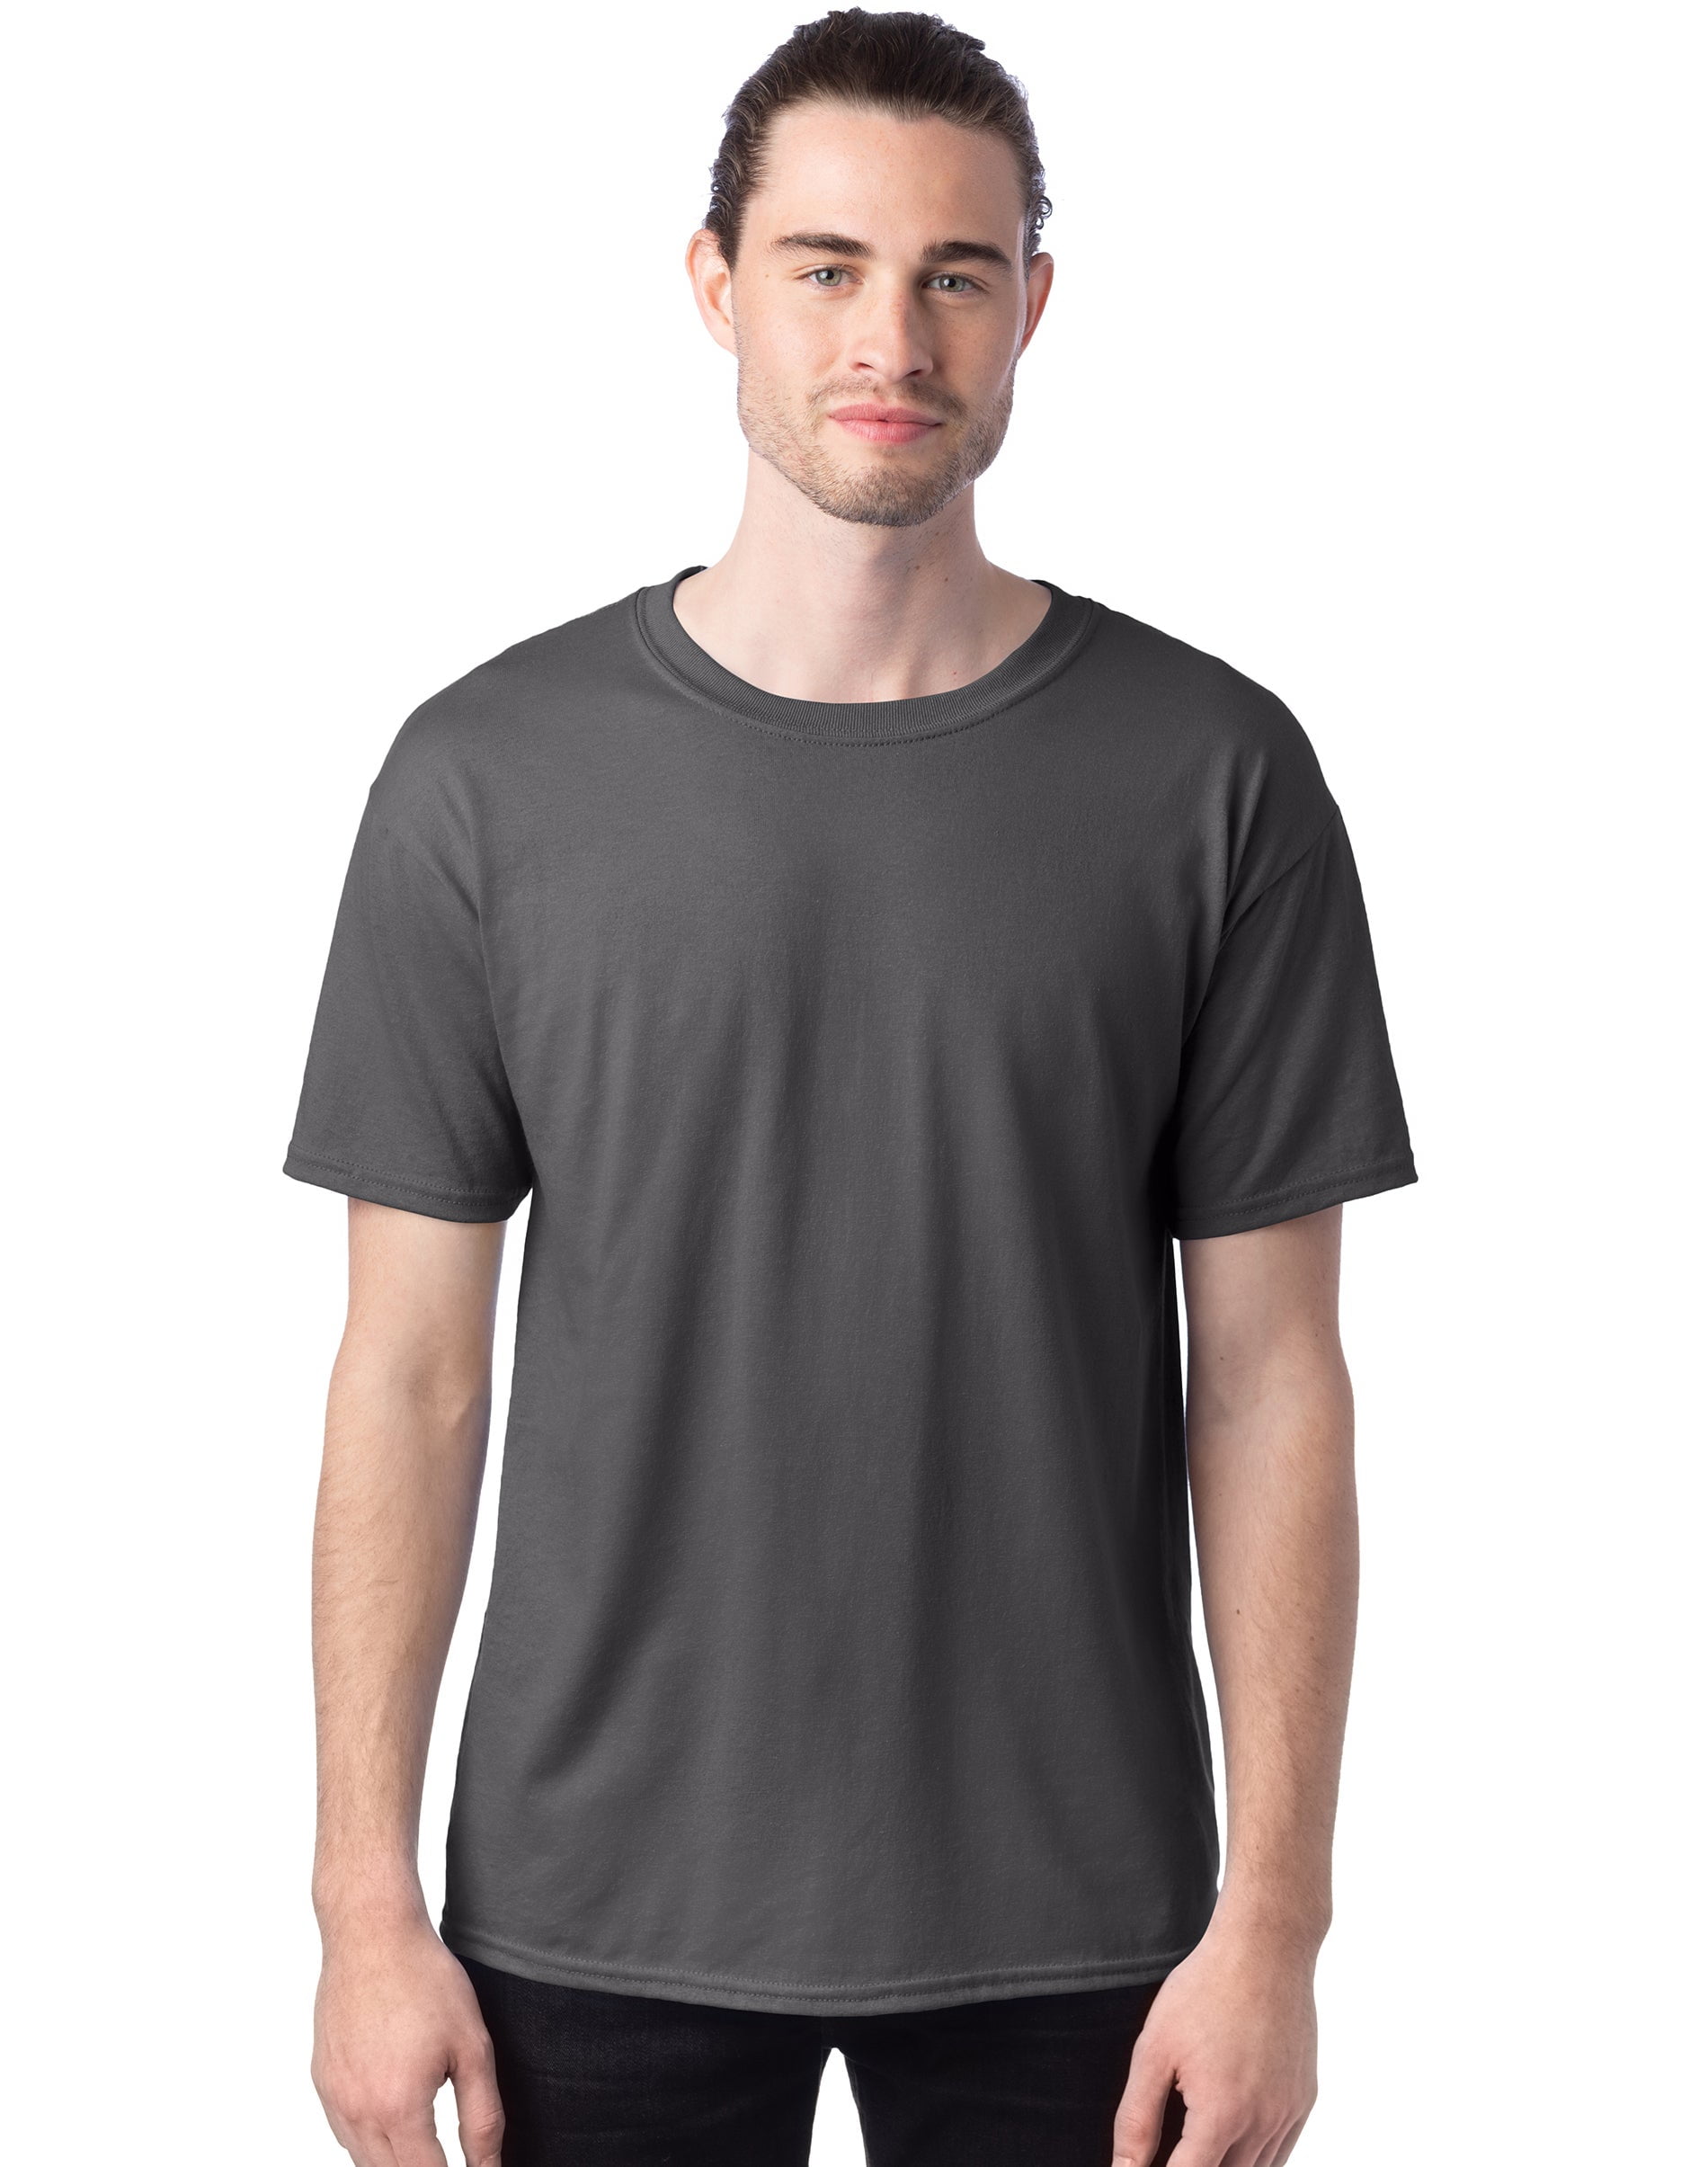 Hanes Men's EcoSmart Short Sleeve T-shirt (4-pack) - Walmart.com